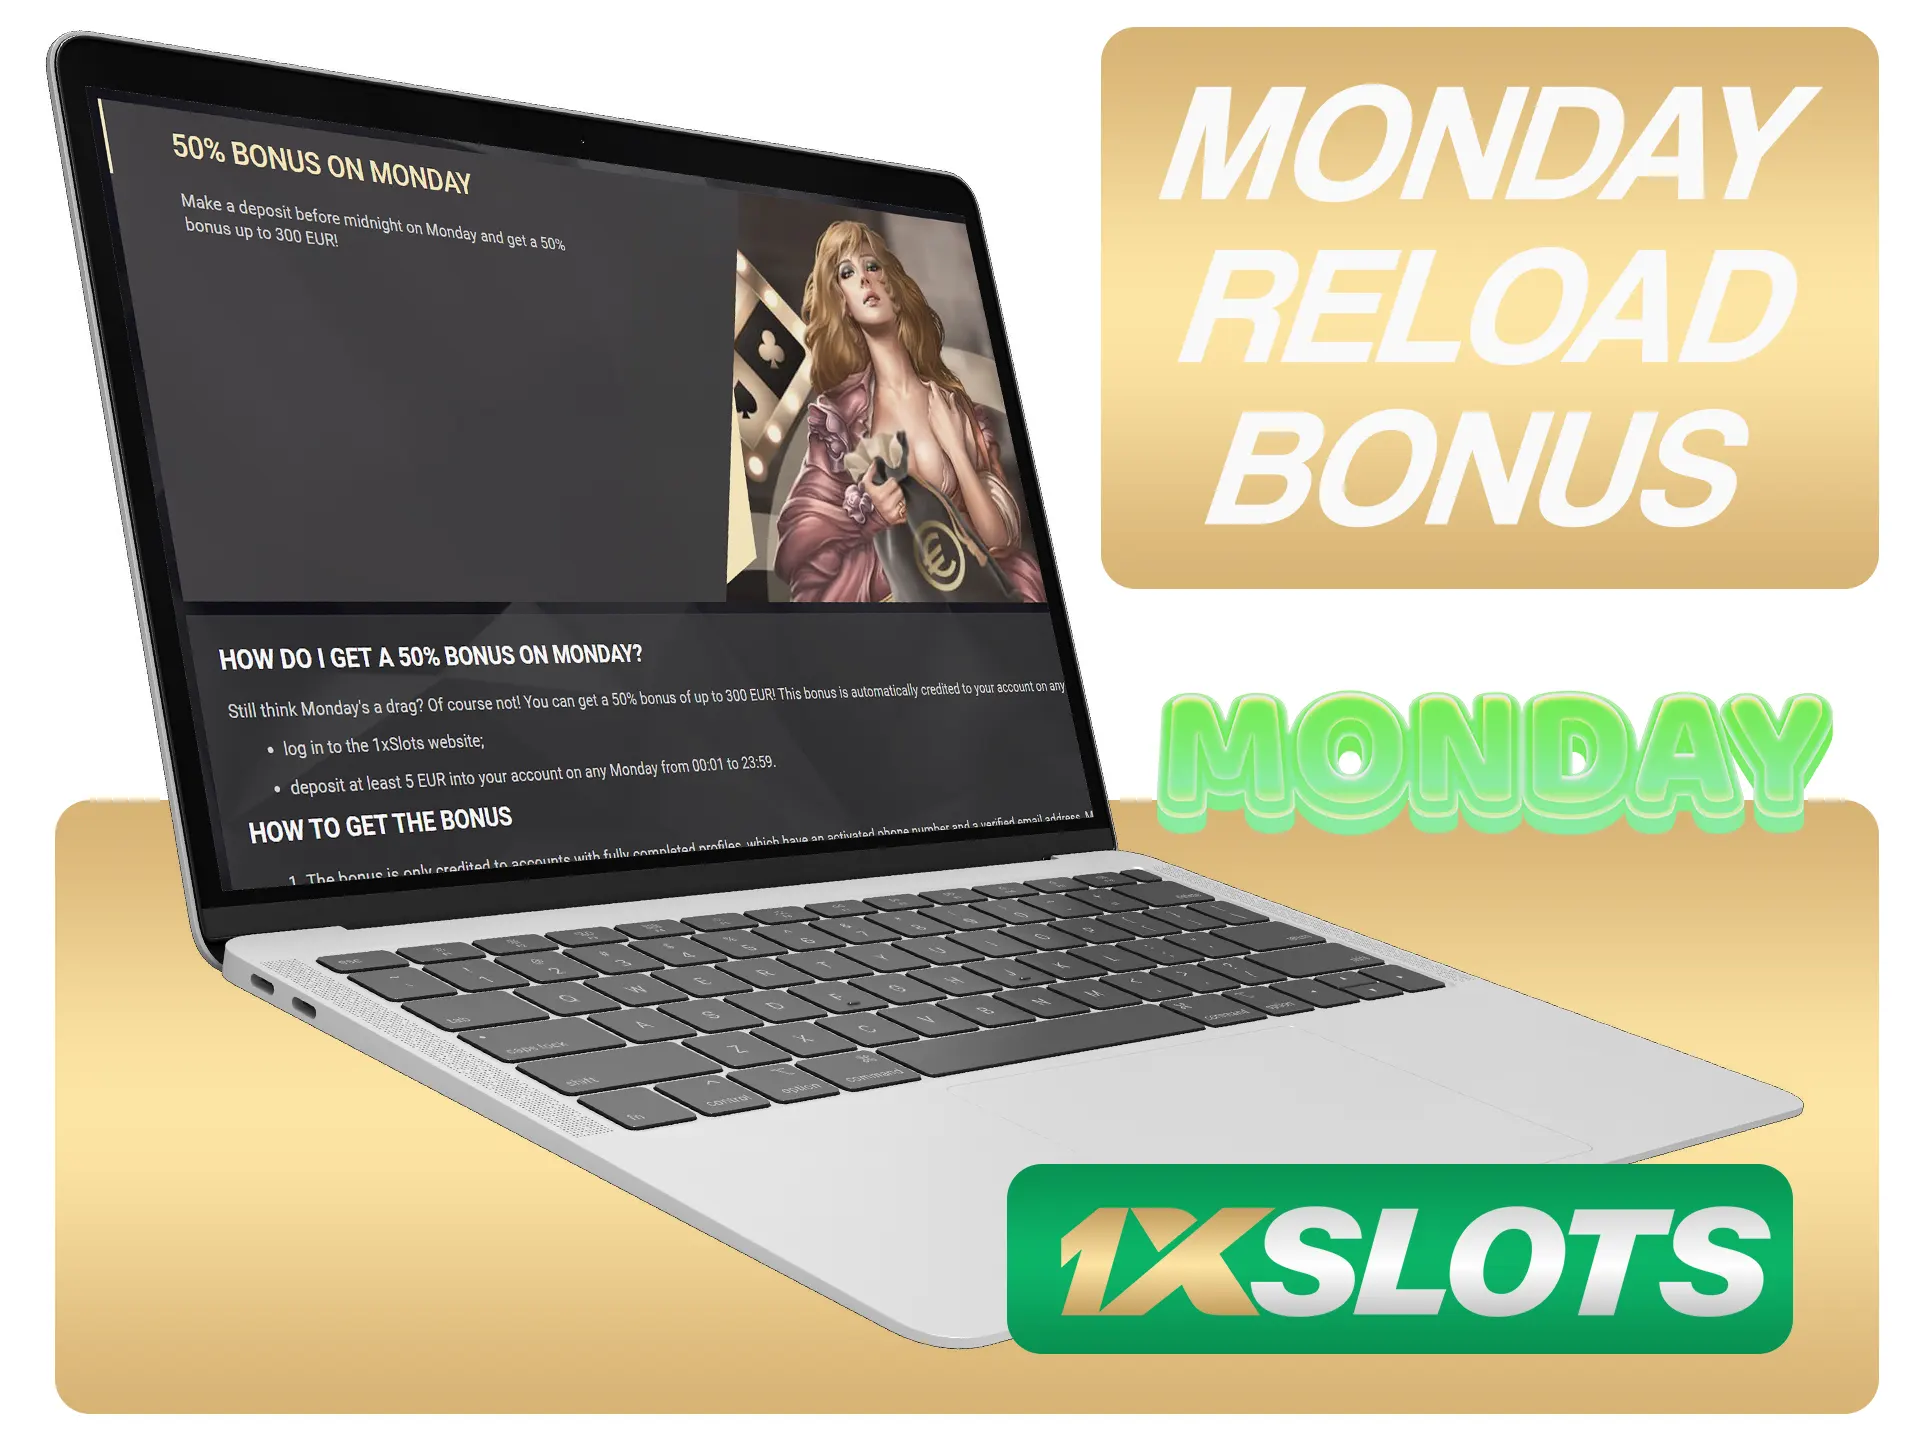 Get your monday bonus each week at 1xSlots.